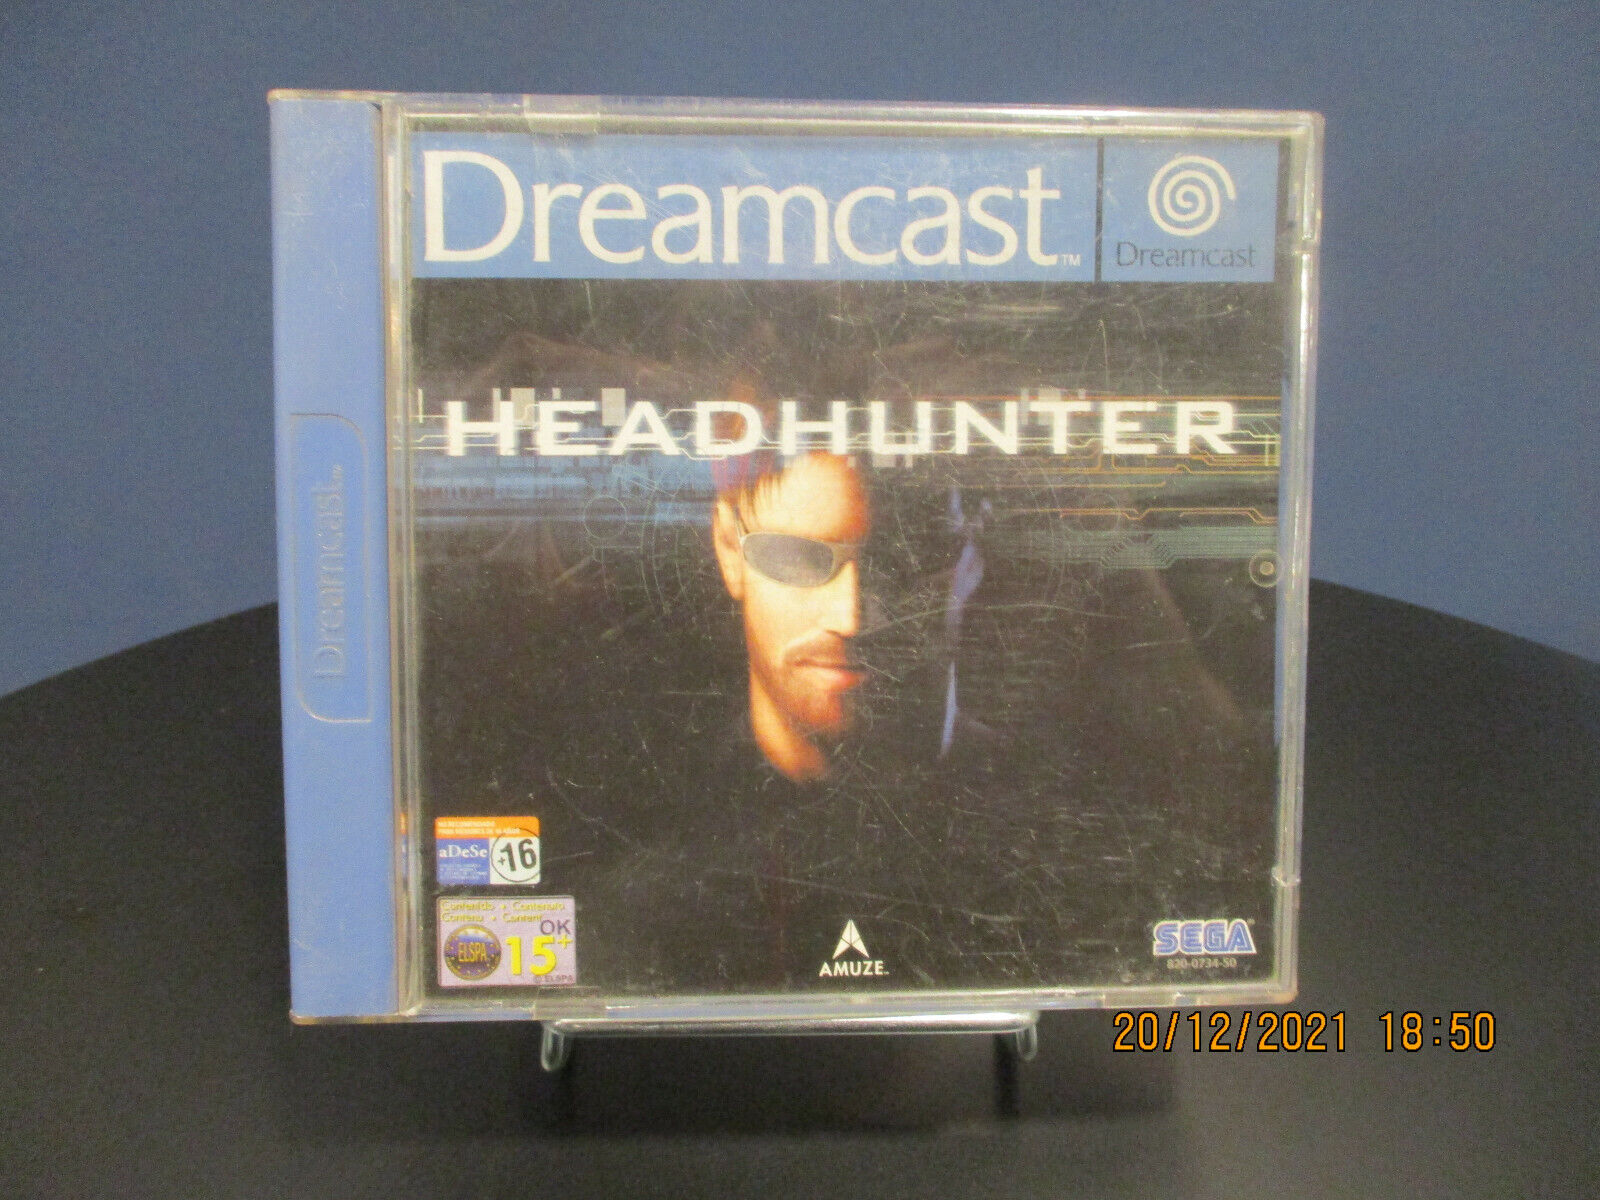 Jeu Sega Dreamcast Headhunter Vers. eur fra eng all esp